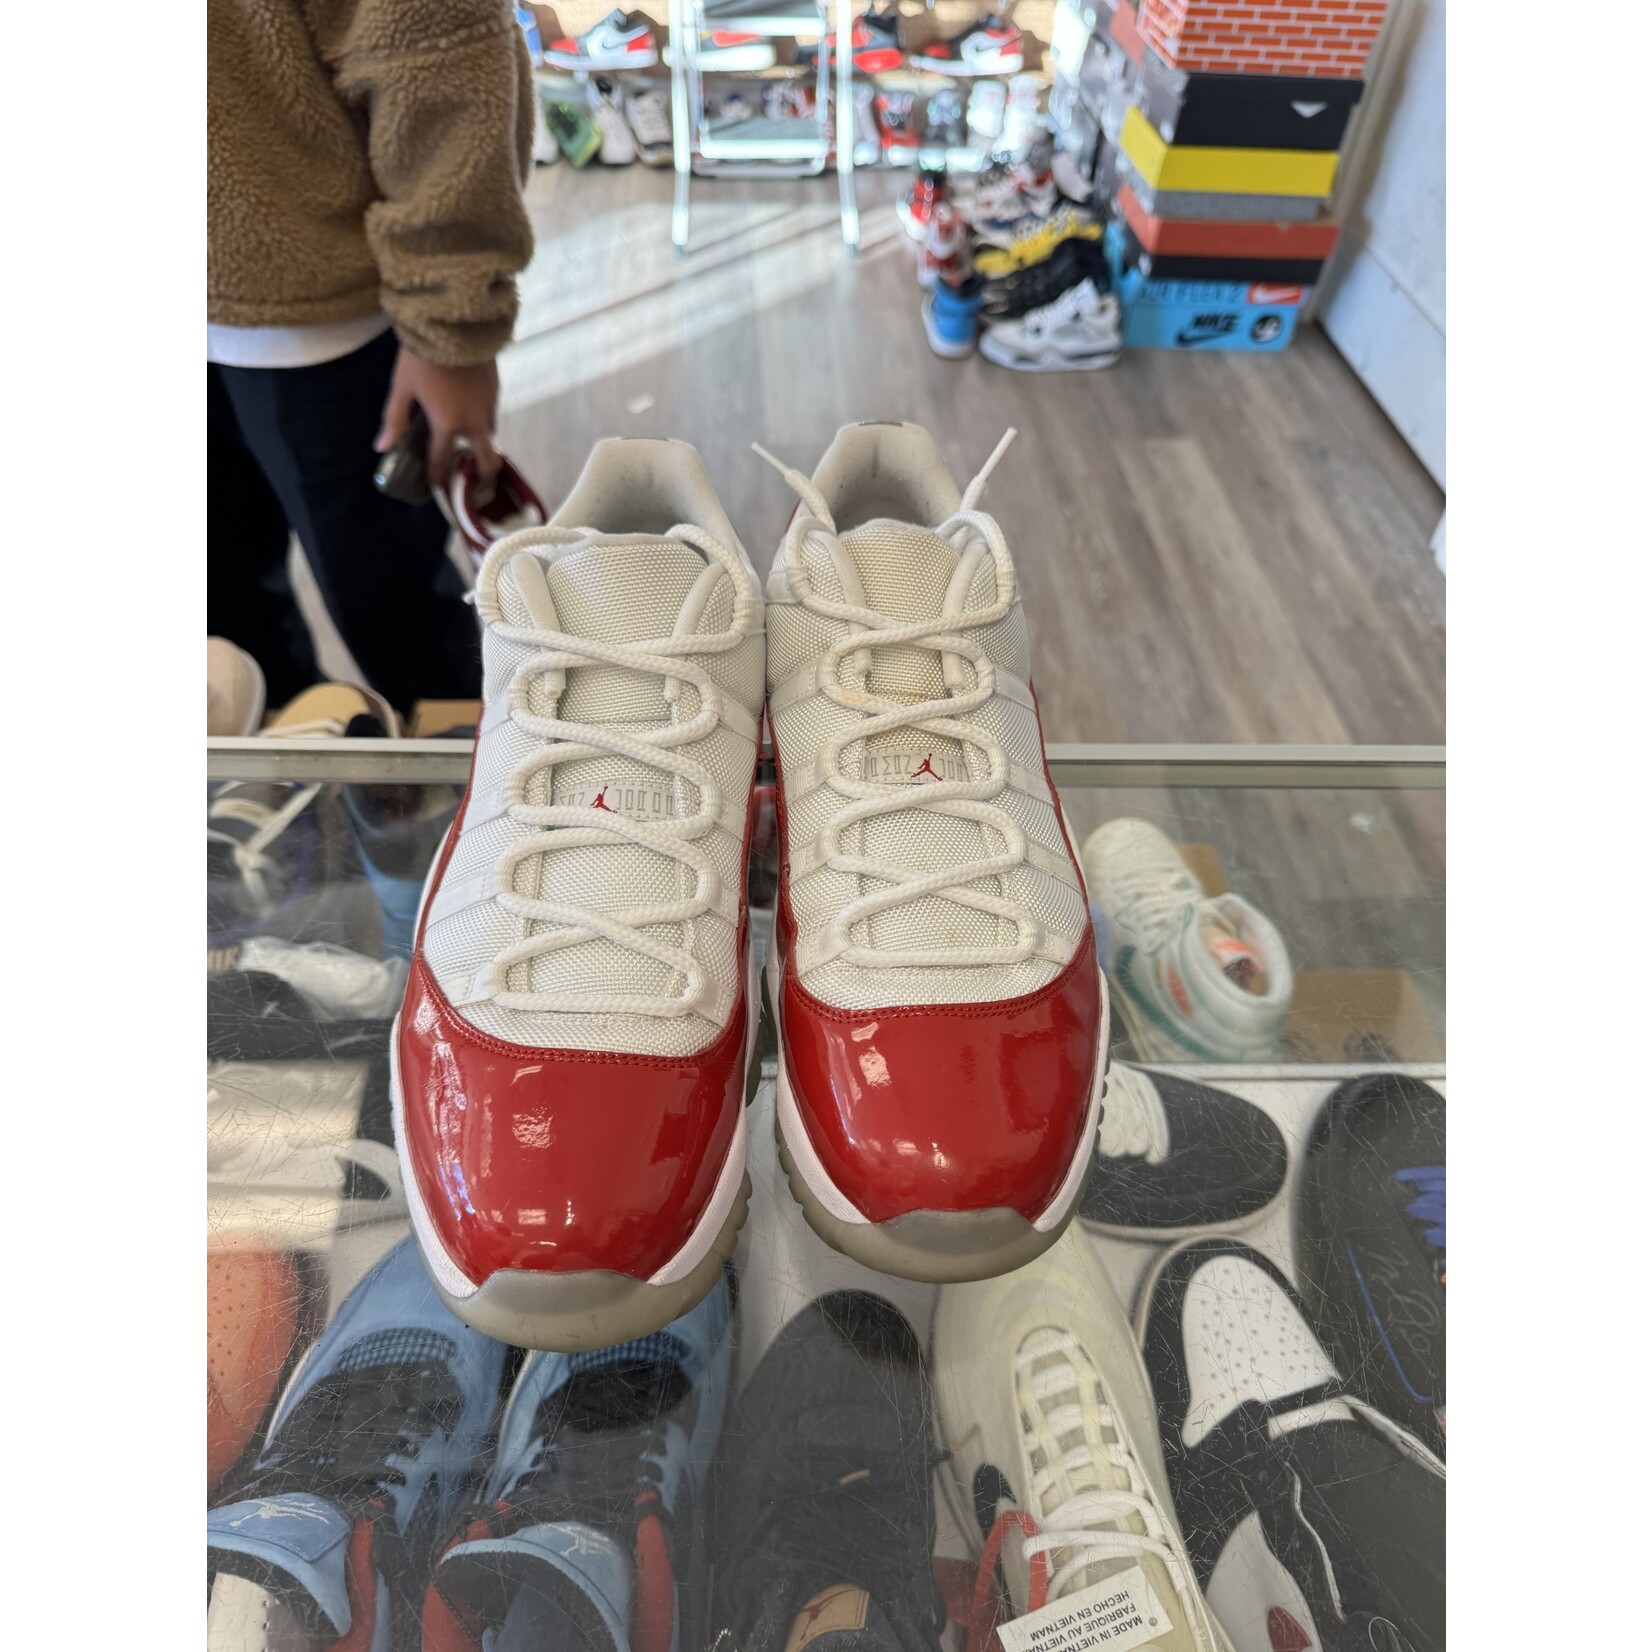 Jordan Jordan 11 Retro Low Cherry (2016) Size 12, PREOWNED NO BOX